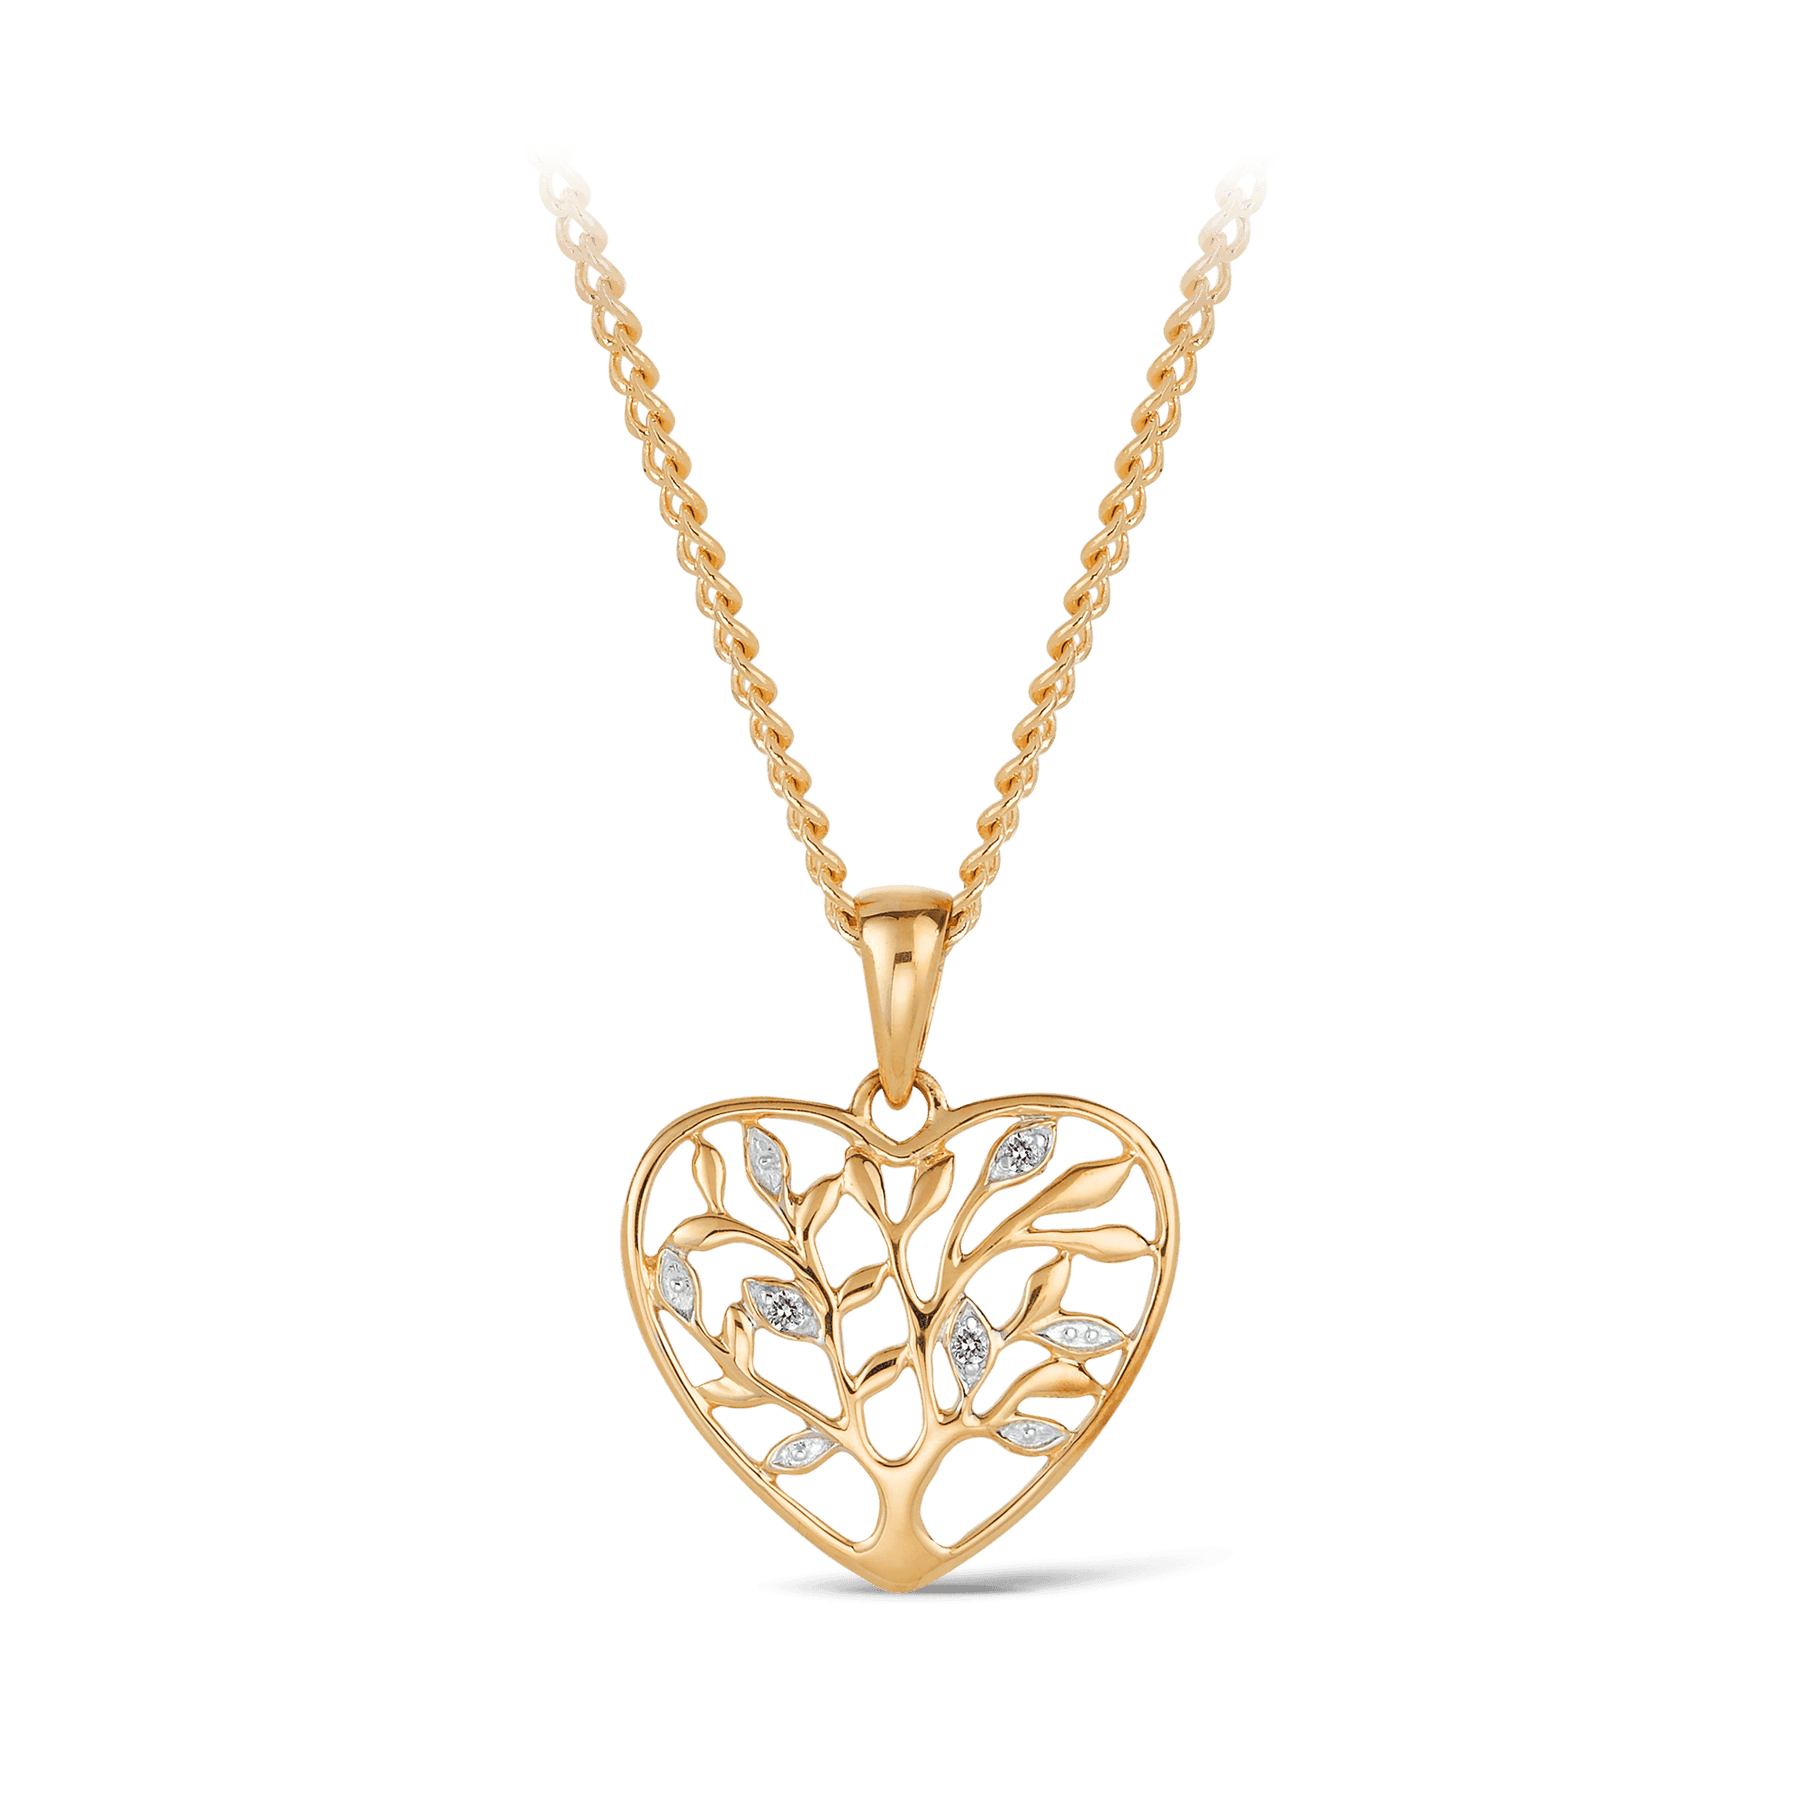 TW 0.0090 Heart Tree Diamond Pendant in 9ct Yellow Gold - Wallace Bishop